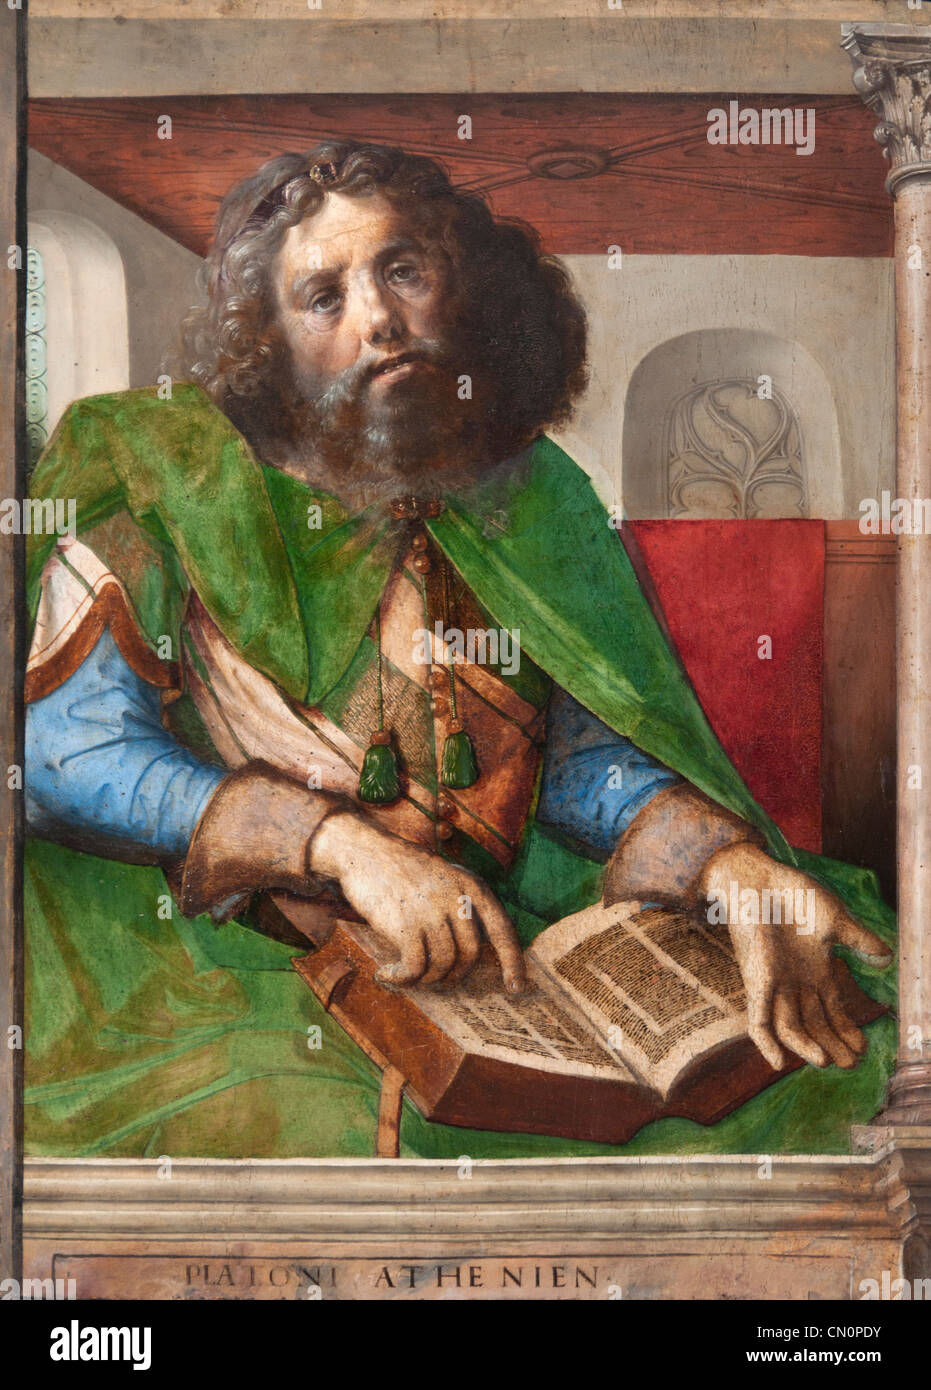 Plato Platon  the Greek philosopher Urbino Paintings 1474 Justus van Gent and Pedro Berruguete Stock Photo